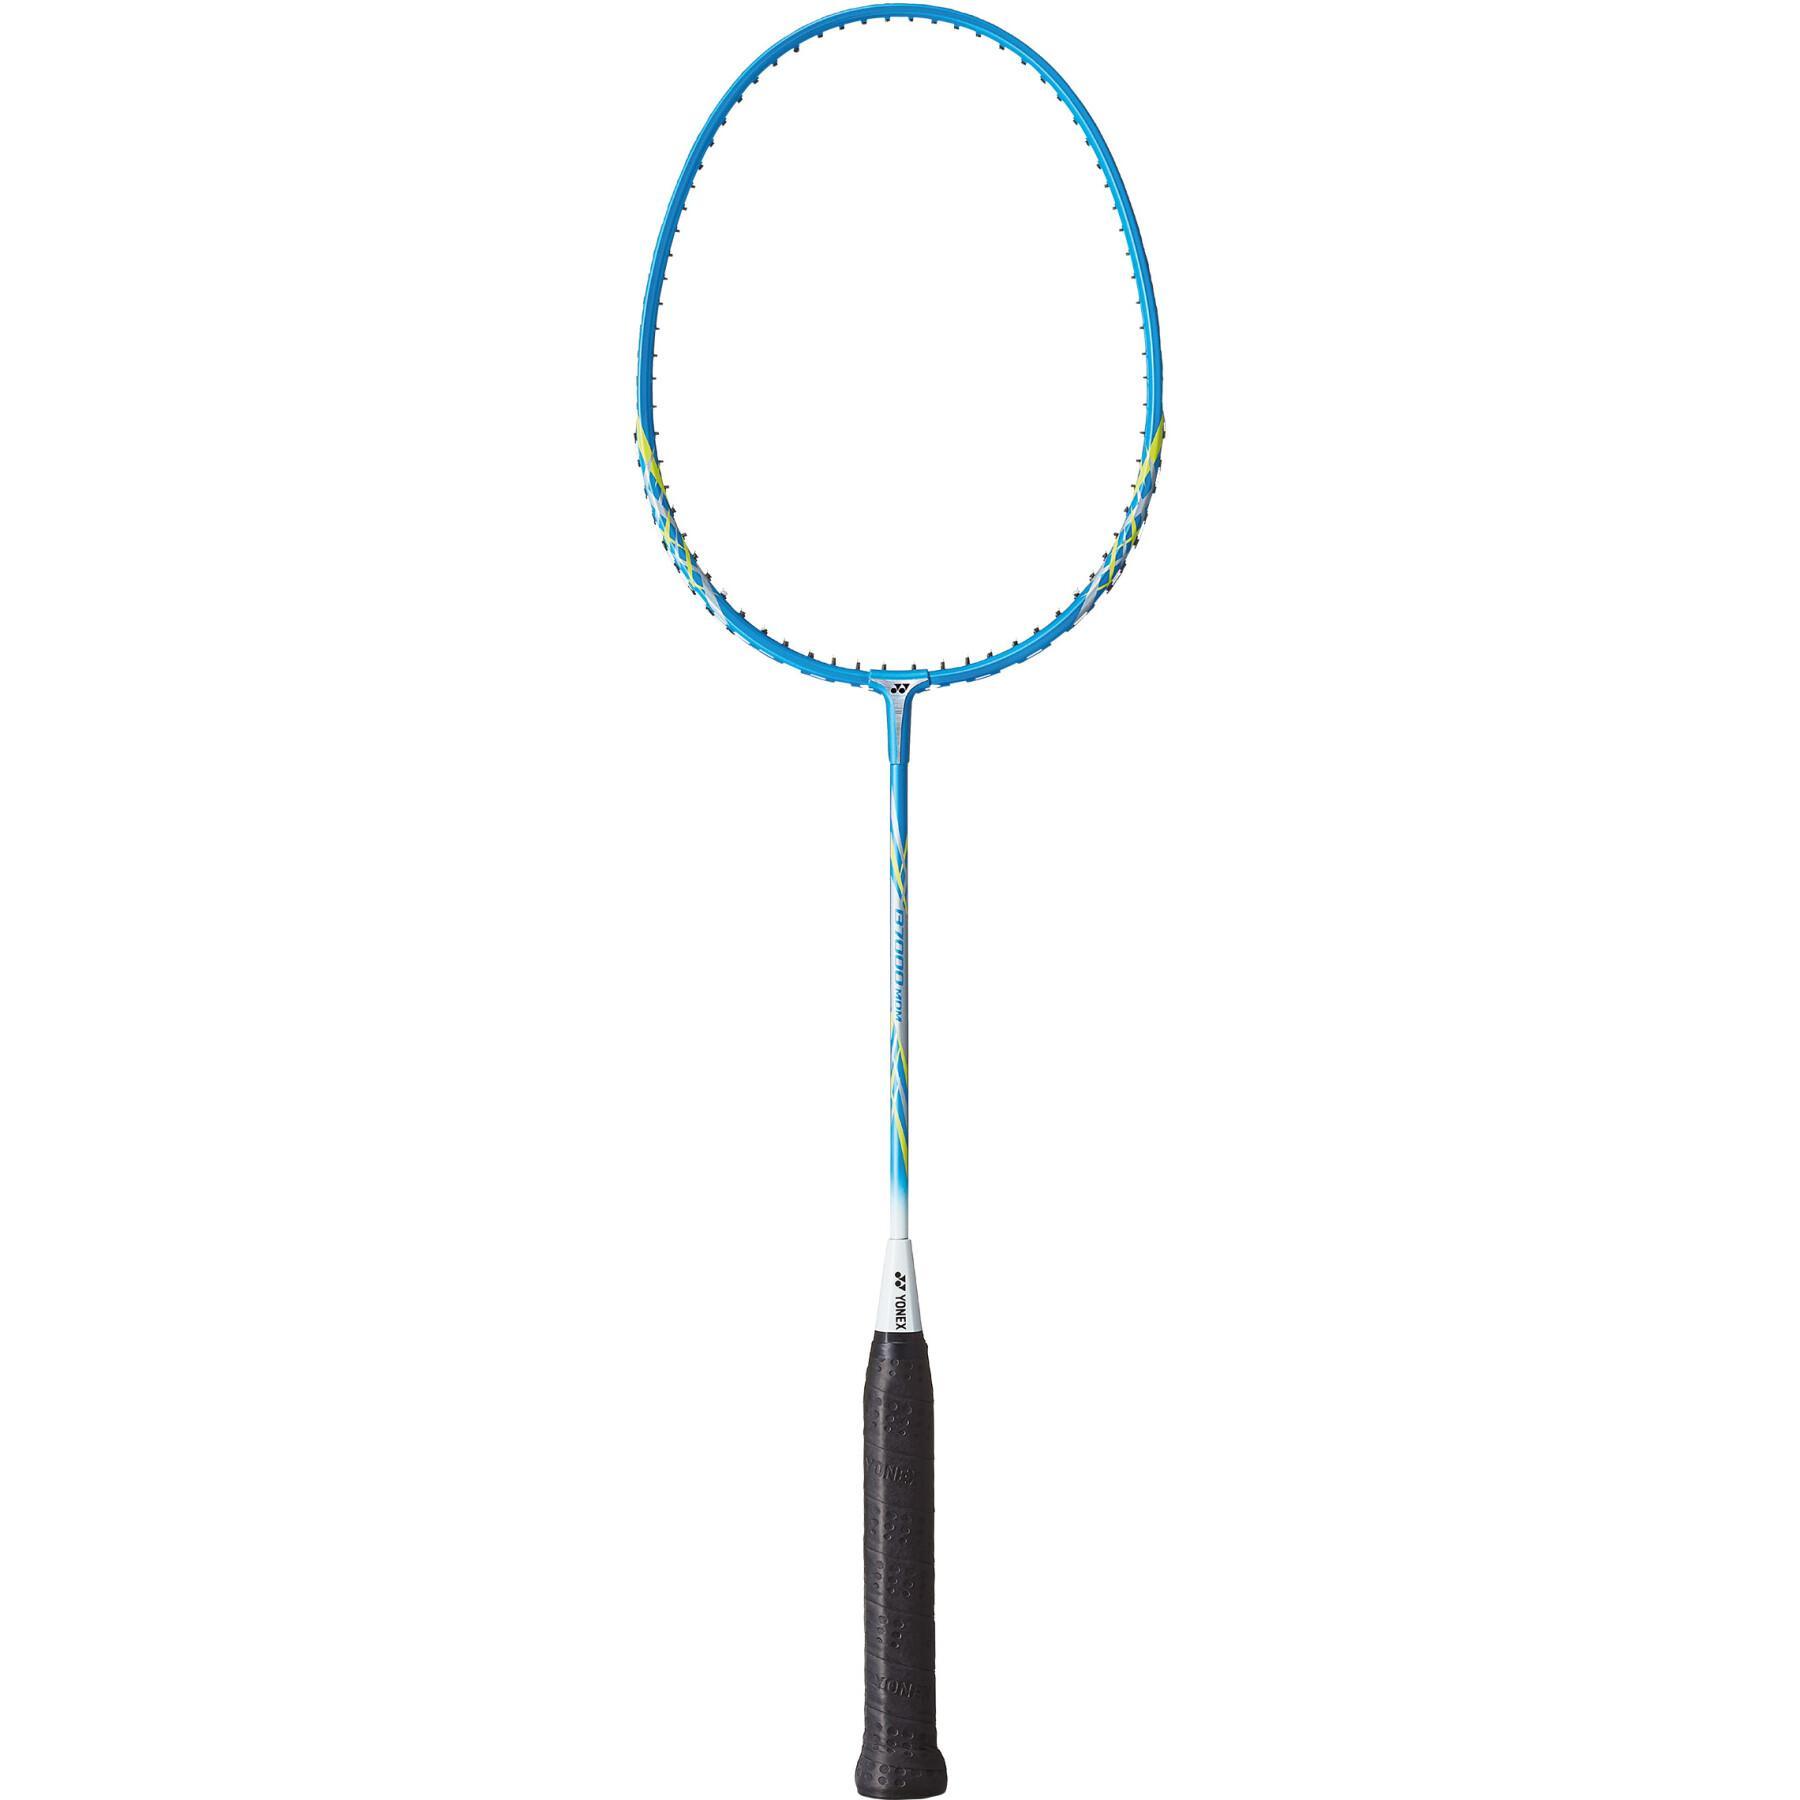 Badmintonschläger Yonex B7000 MDM U4